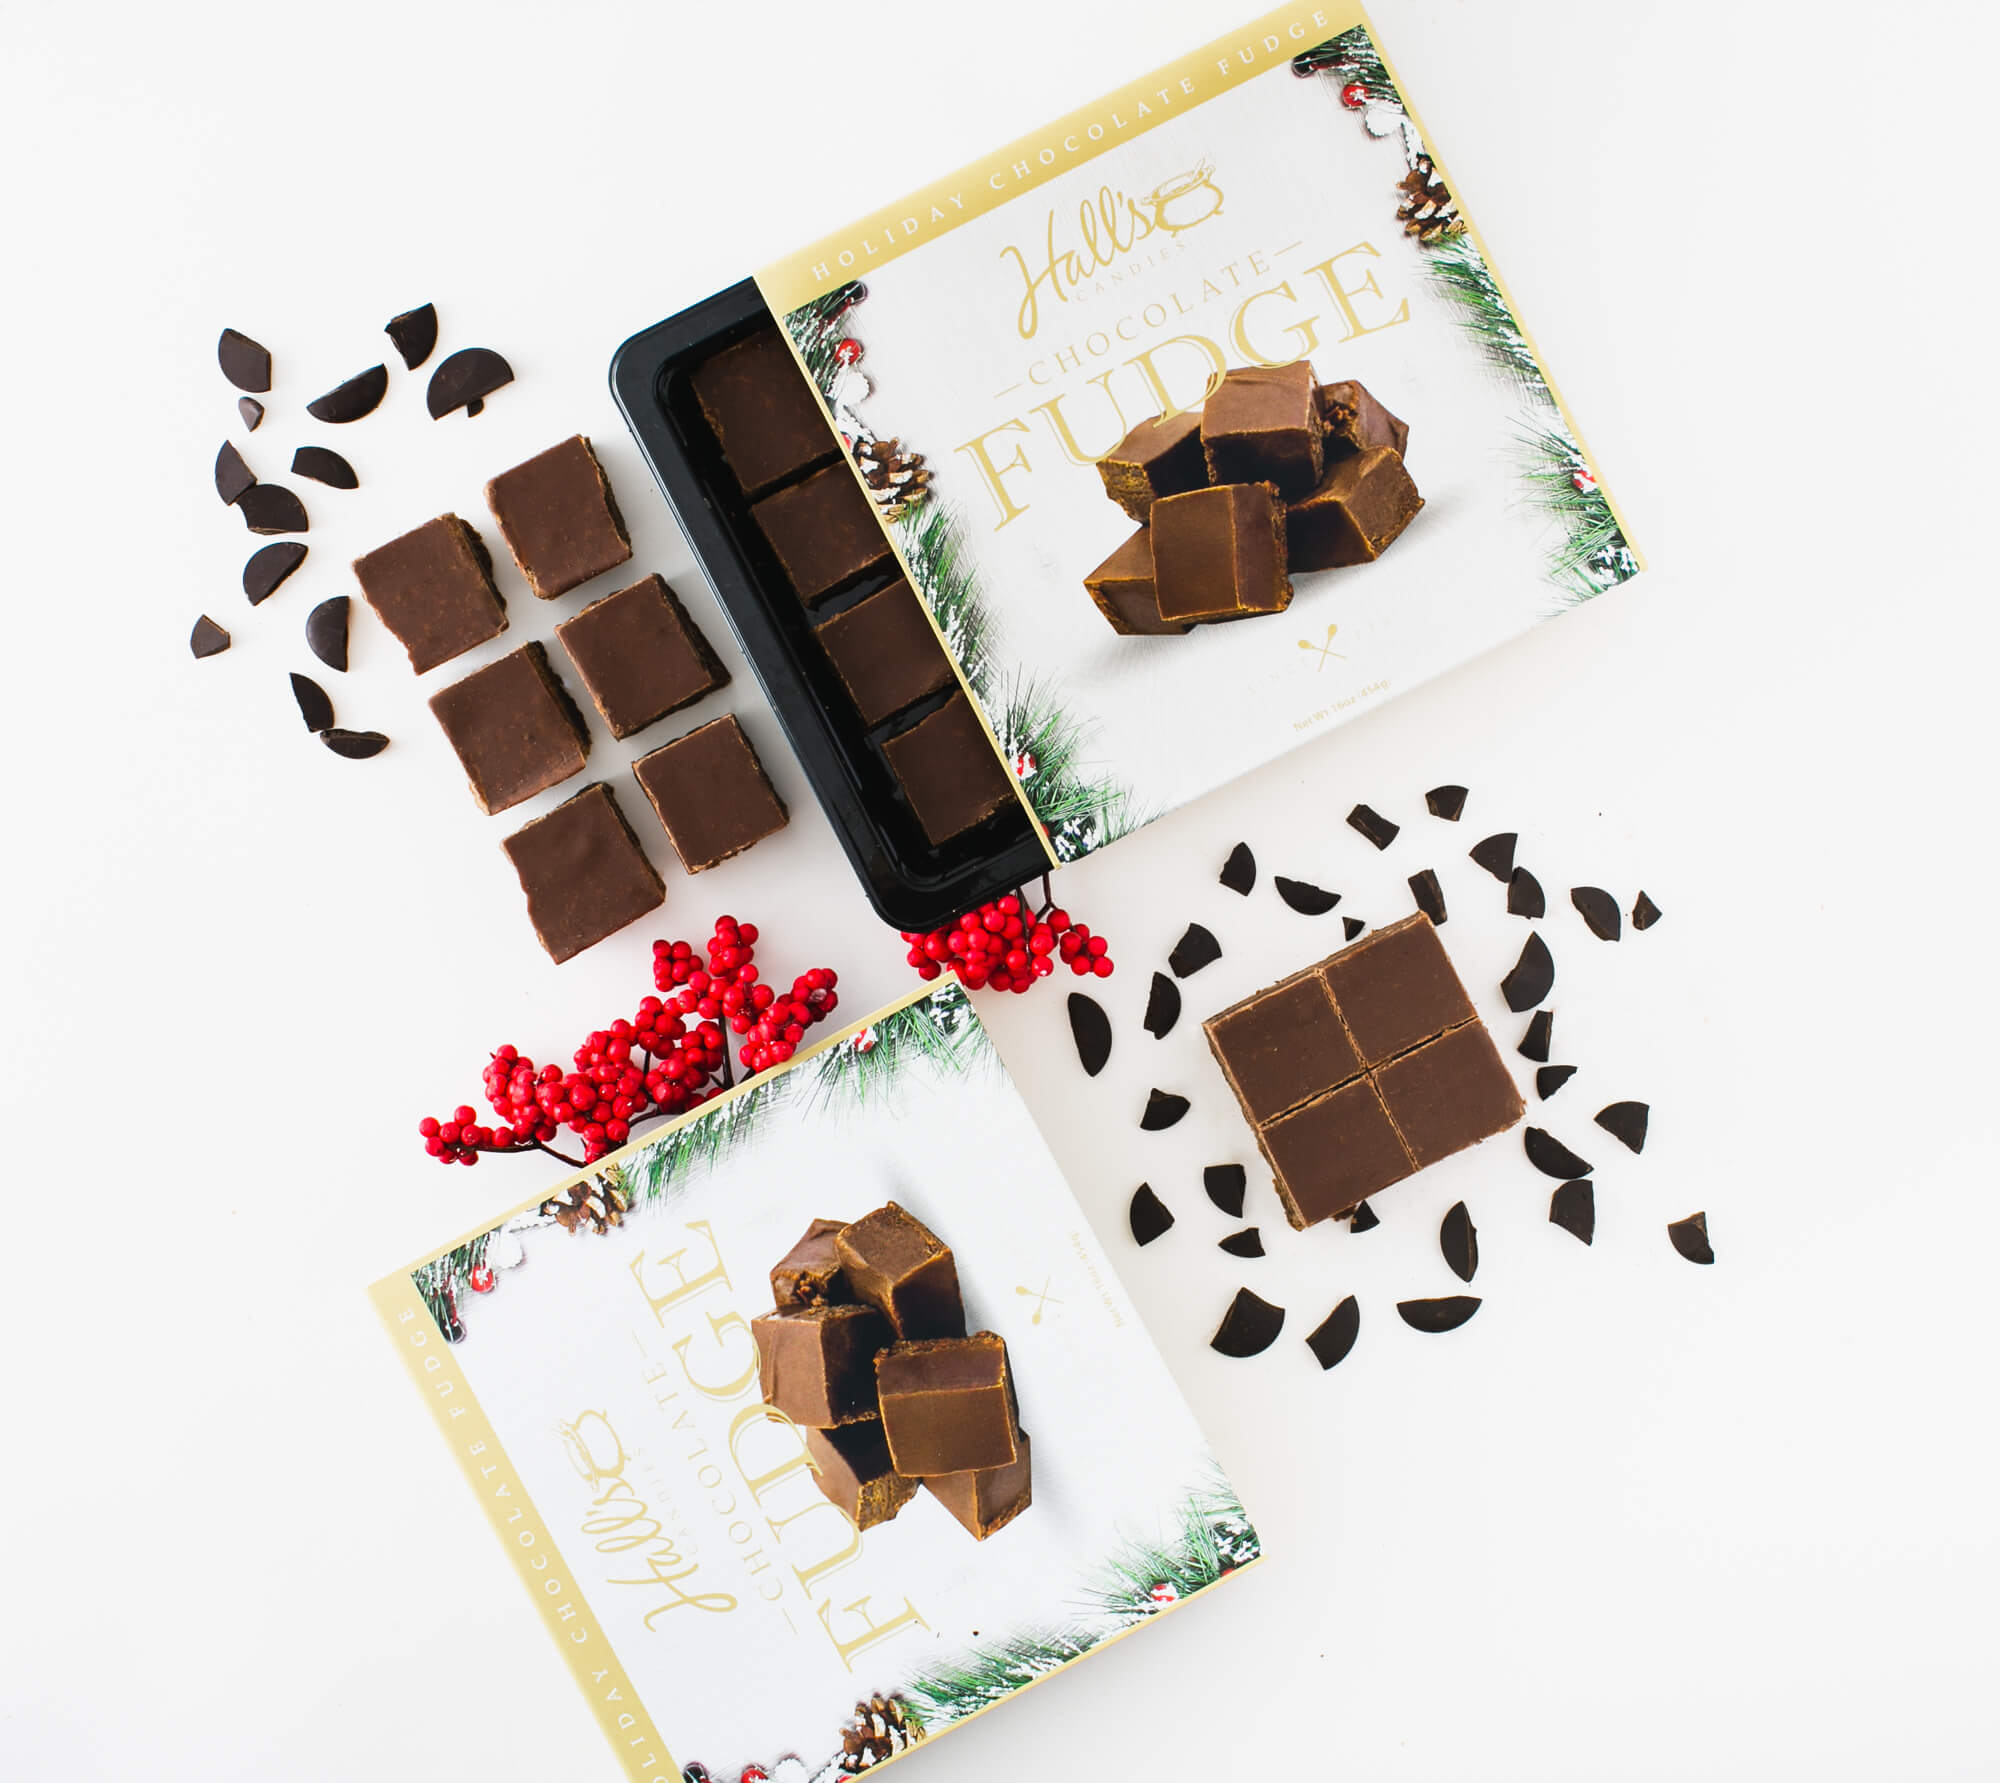 festive arrangement of holiday chocolate fudge on white background